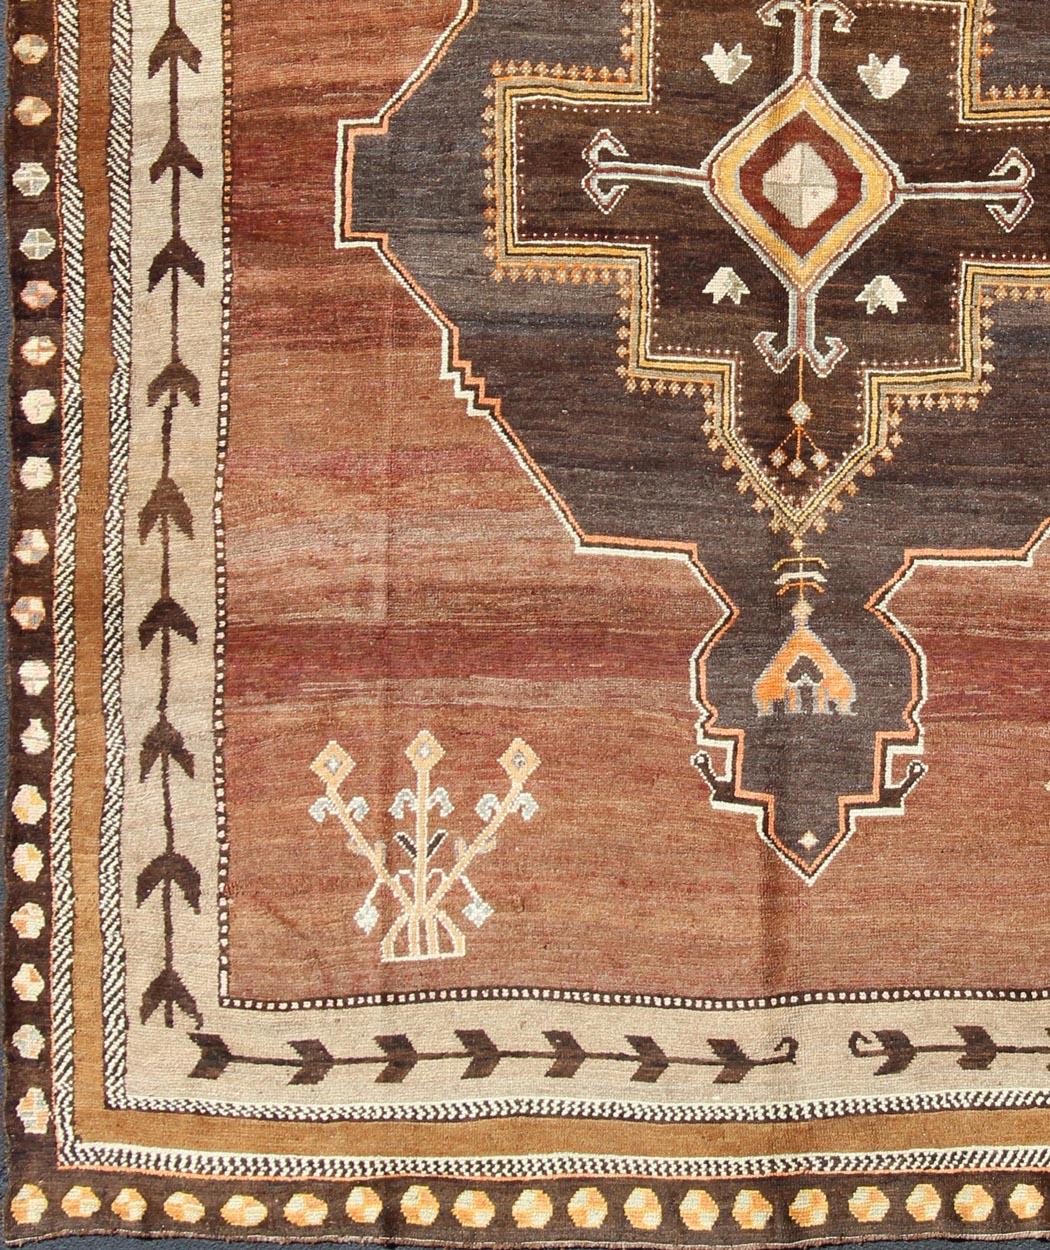 Large Square Vintage Turkish Kars With Geometric Tribal Medallion Design. Keivan Woven Arts / rug EN-112304, country of origin / type: Turkey / Tribal, circa mid-20th century. Square size rug. 
Measures: 10'5 x 11'7. 
This stunning bold Turkish rug